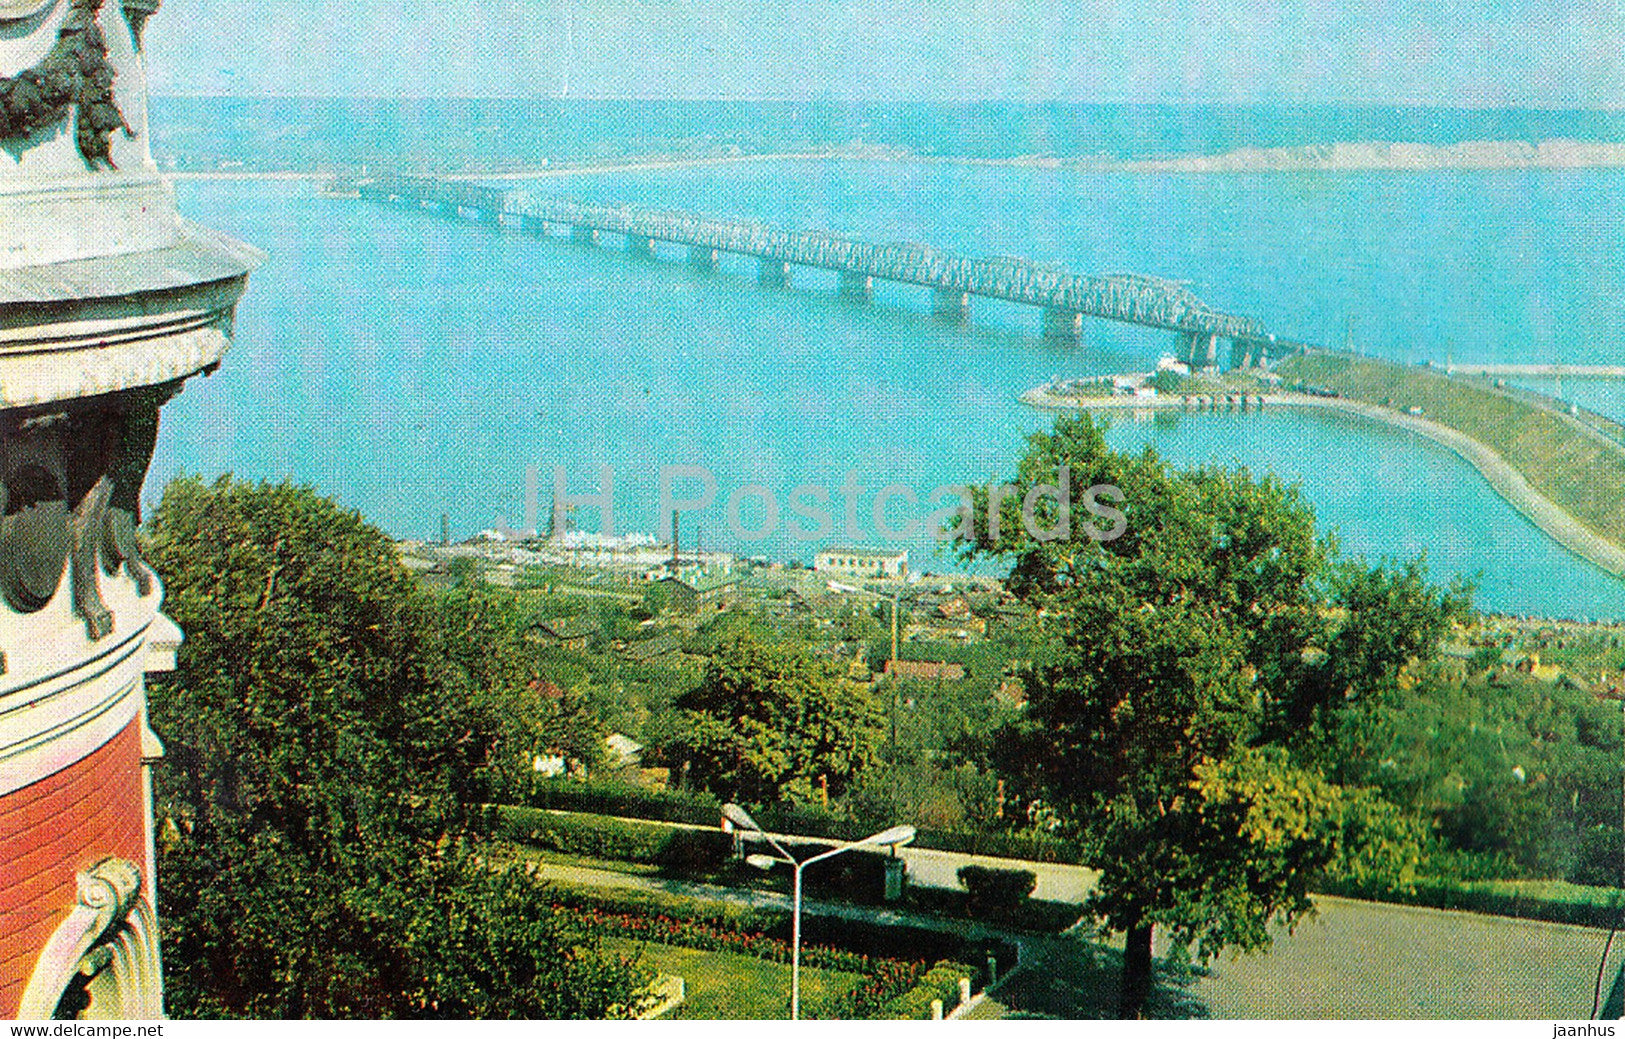 Ulyanovsk - View at Volga river - 1976 - Russia USSR - unused - JH Postcards